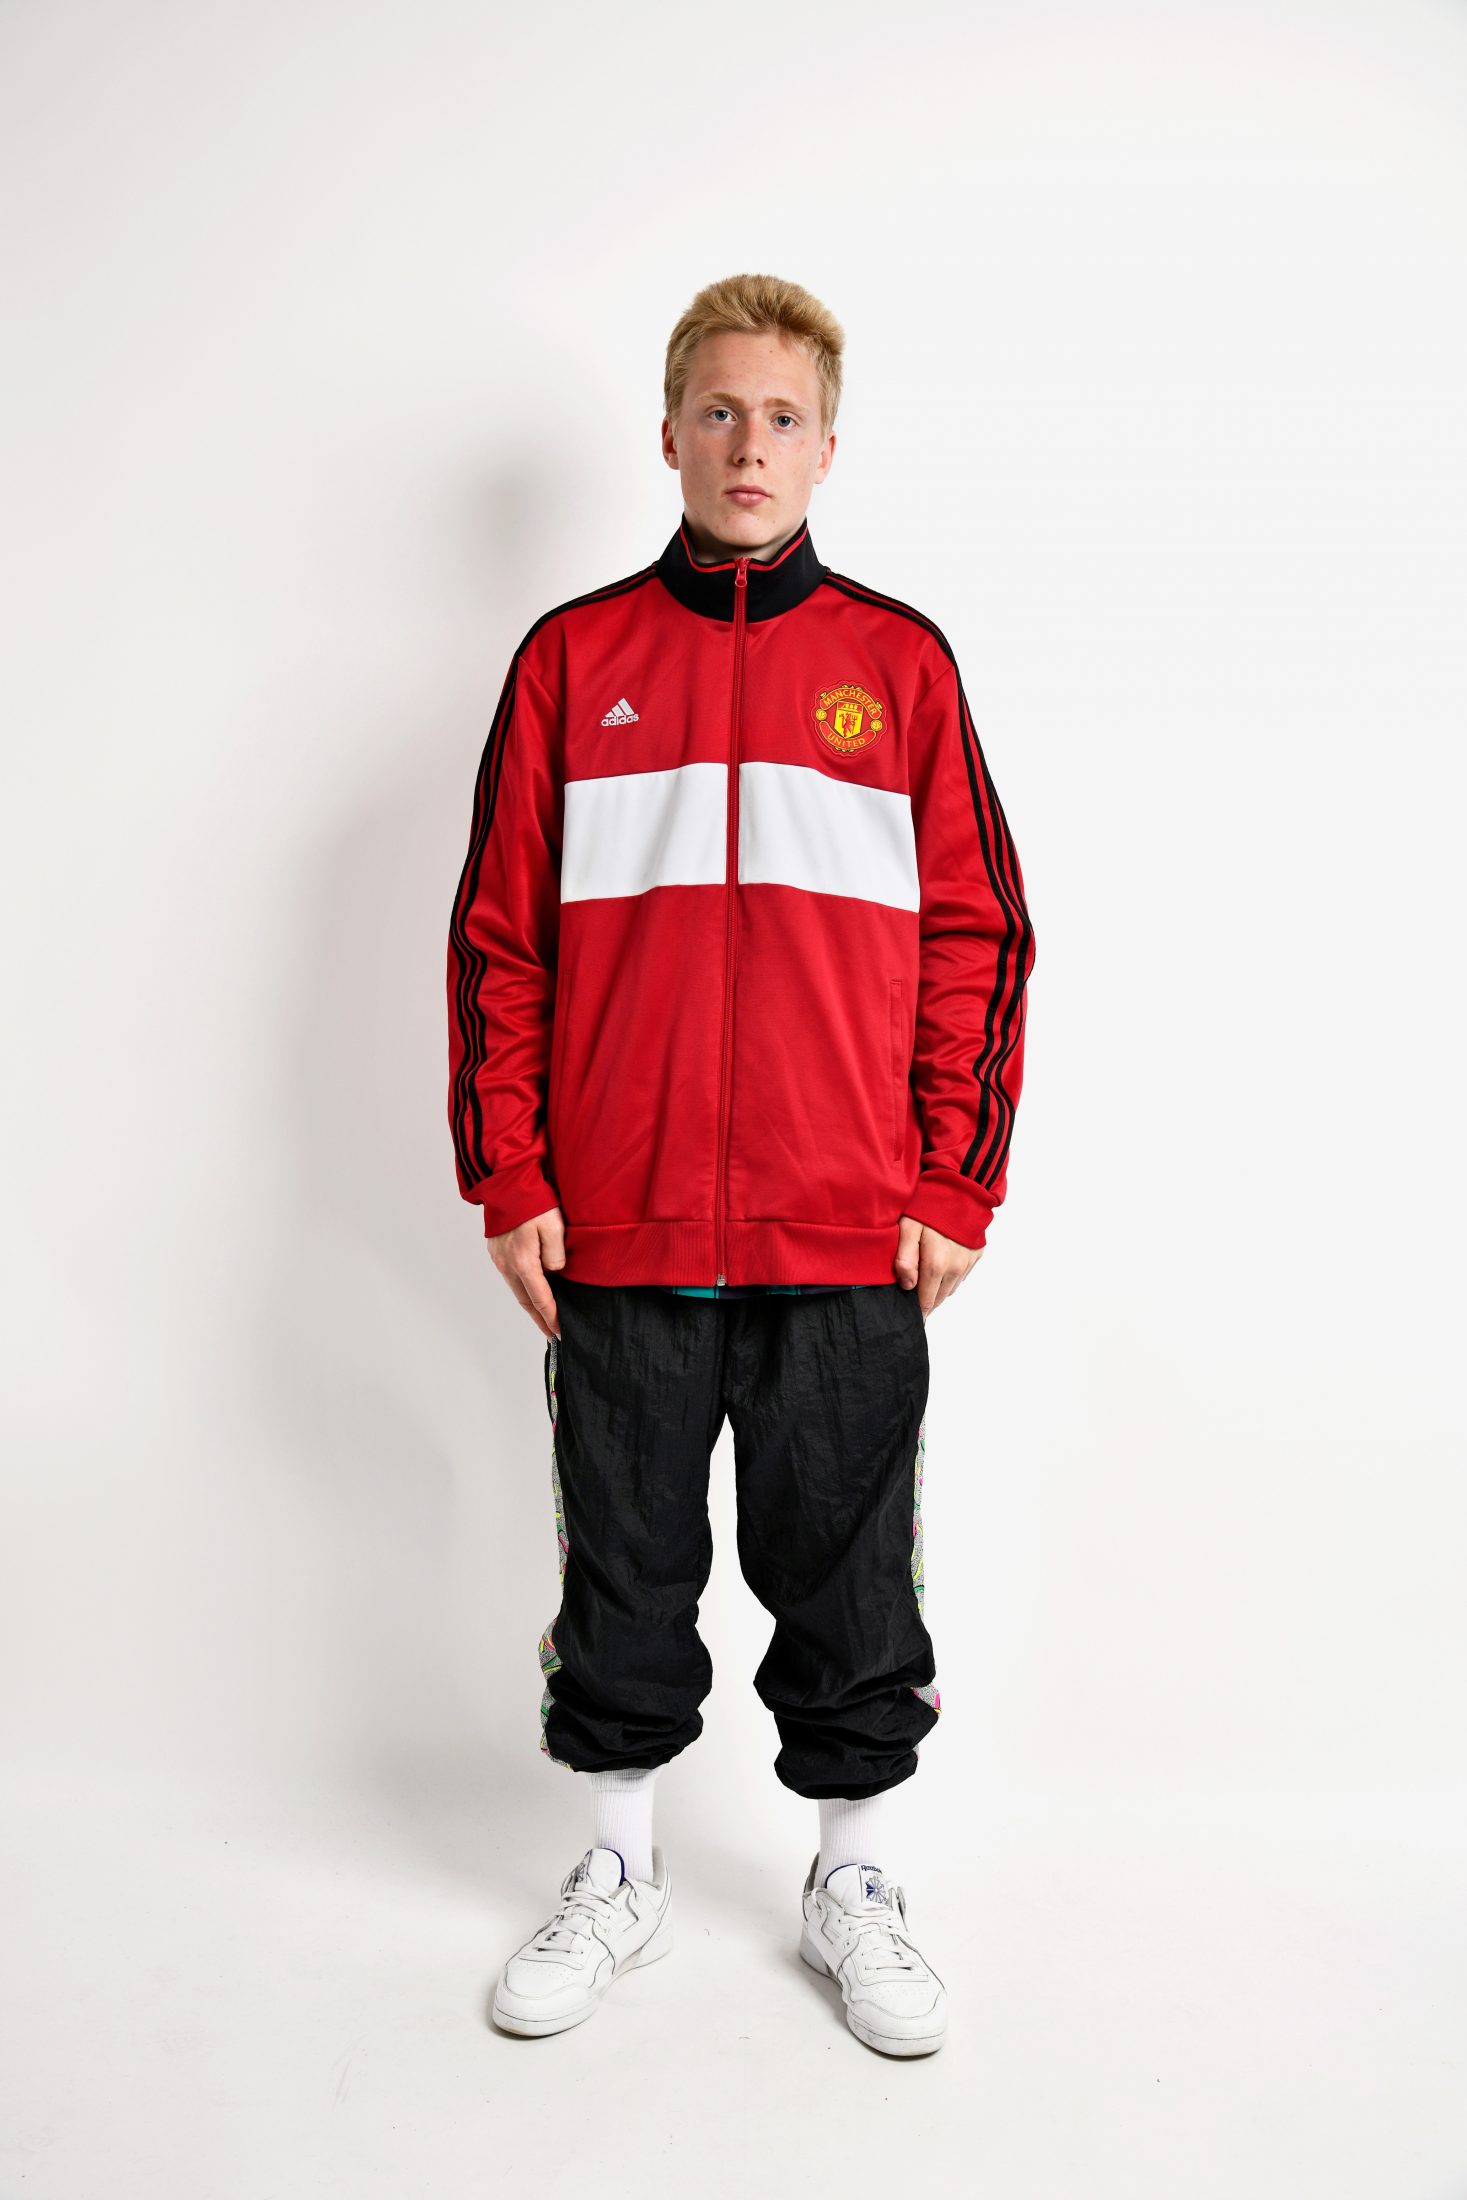 Manchester United Adidas jacket | Vintage clothes online for men